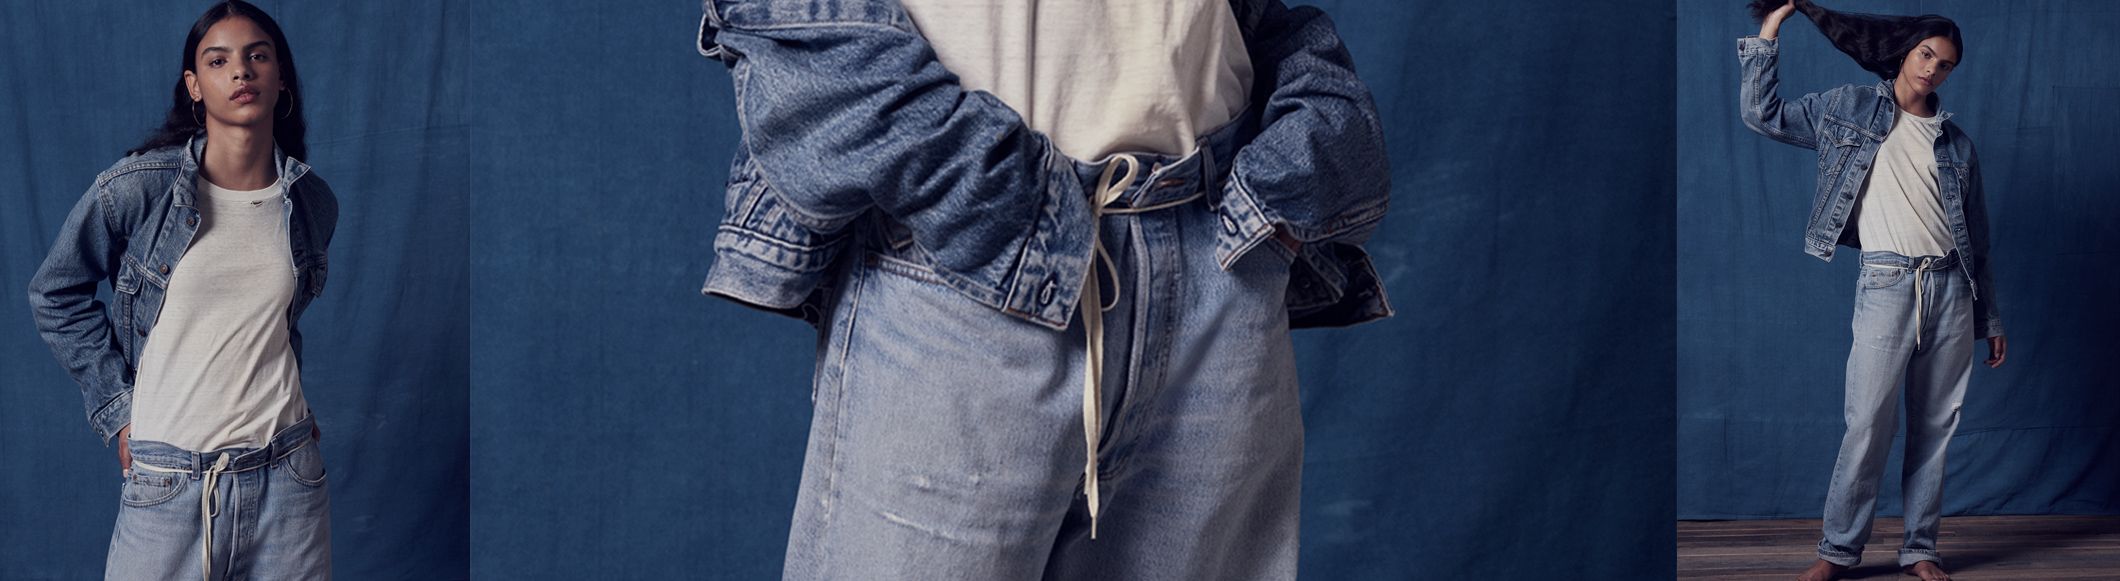 501 boyfriend jeans